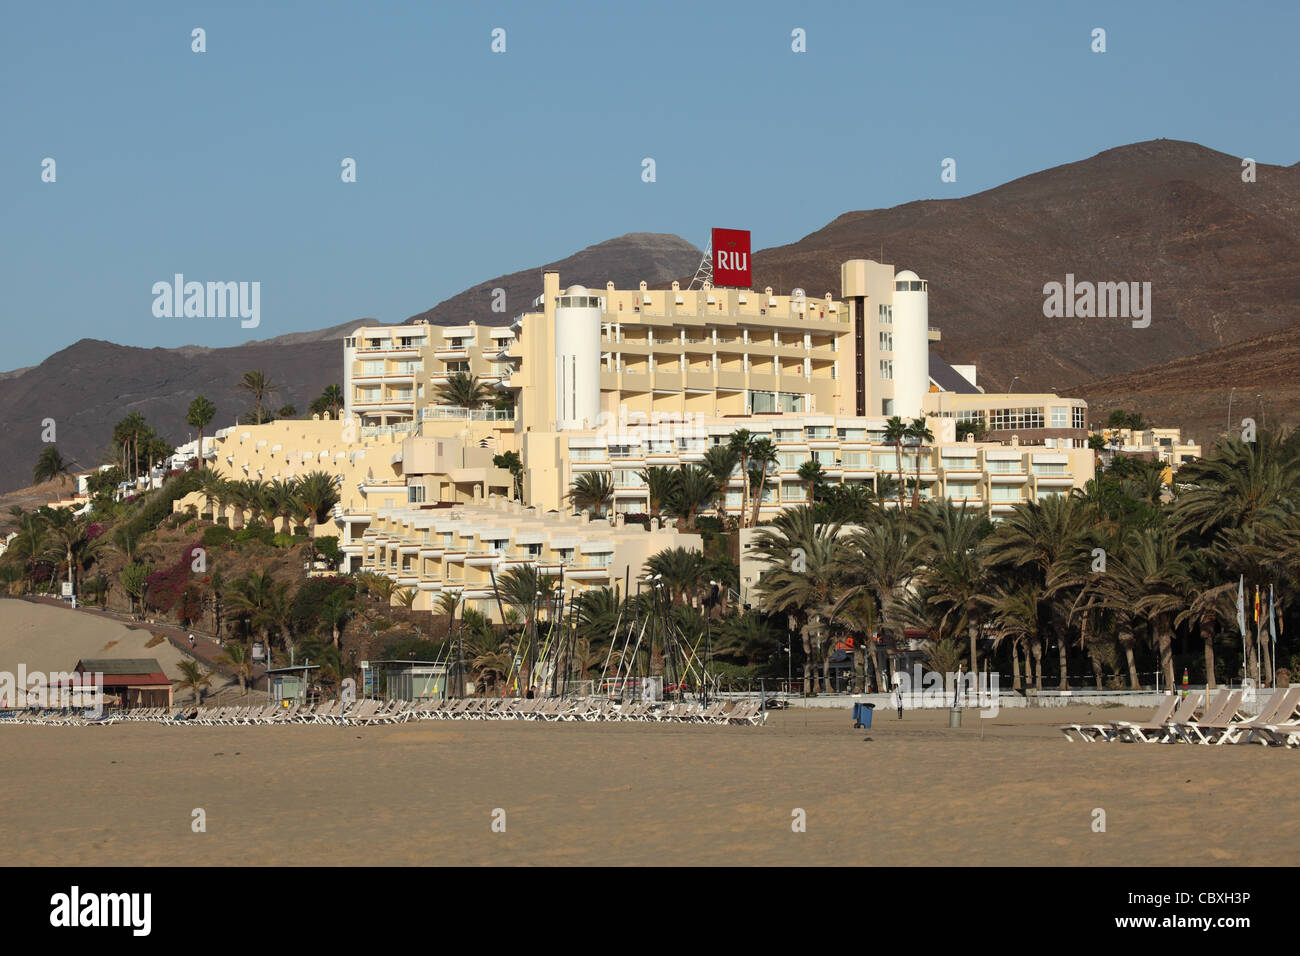 Hotel RIU in Morro Jable, Canary Island Fuerteventura, Spain Stock Photo